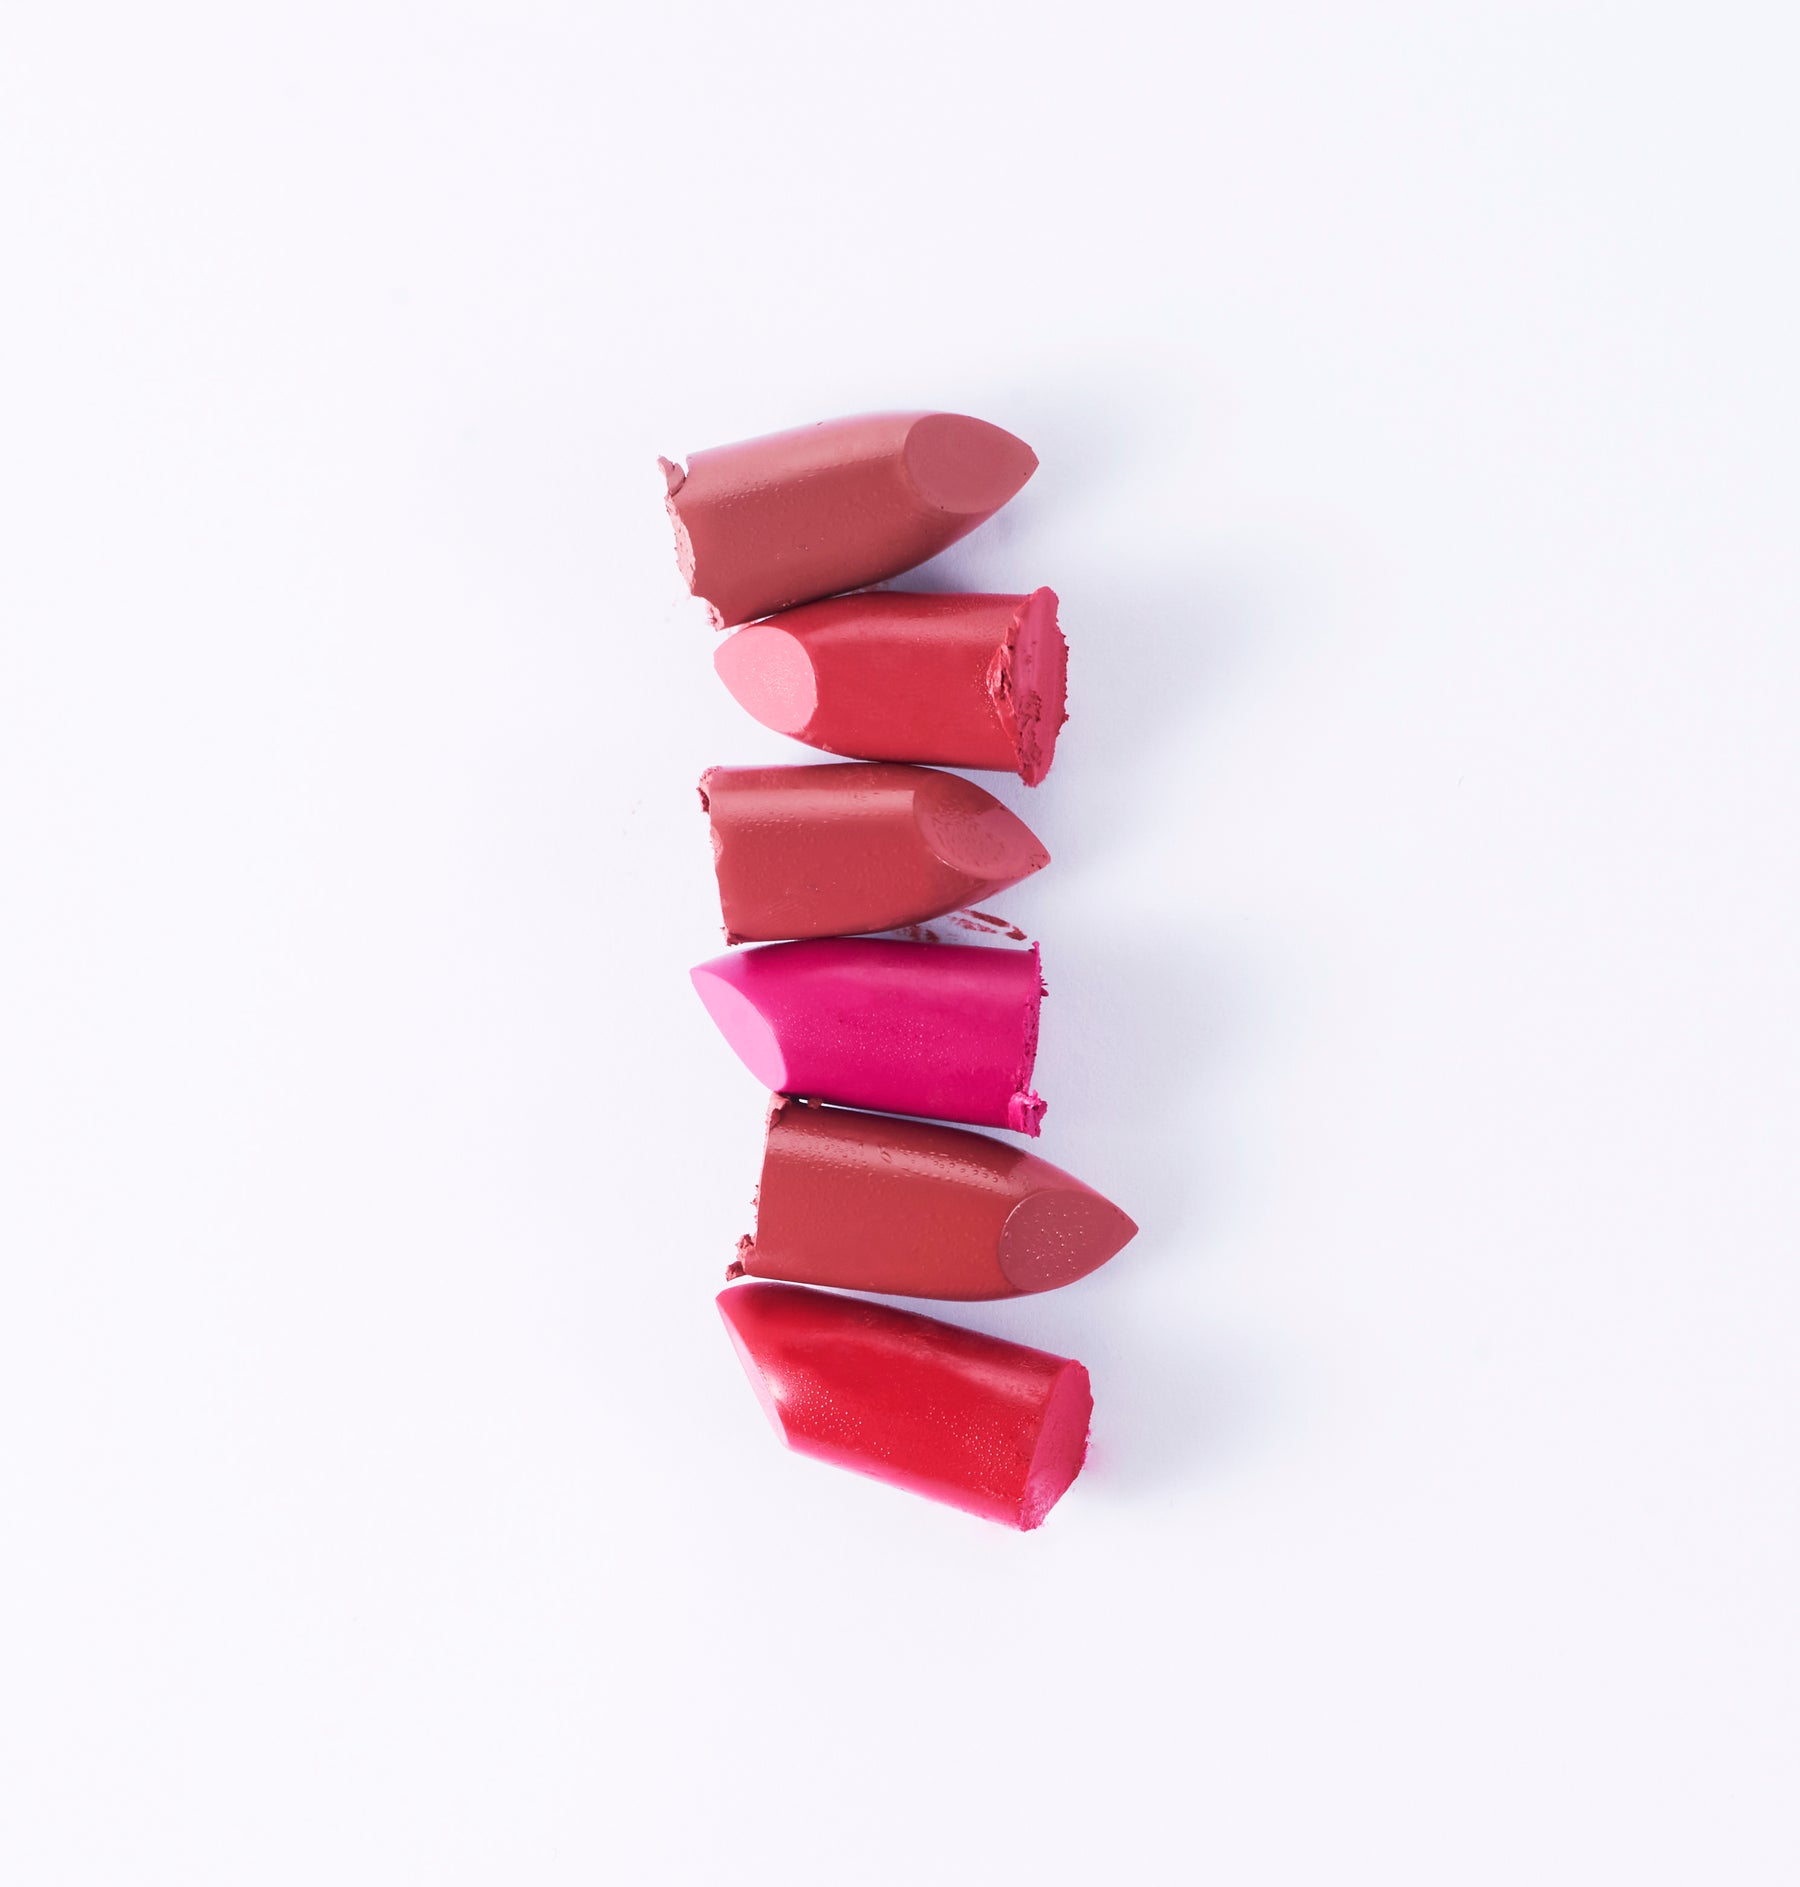 Coral reef vegan lipstick - Sweetlips